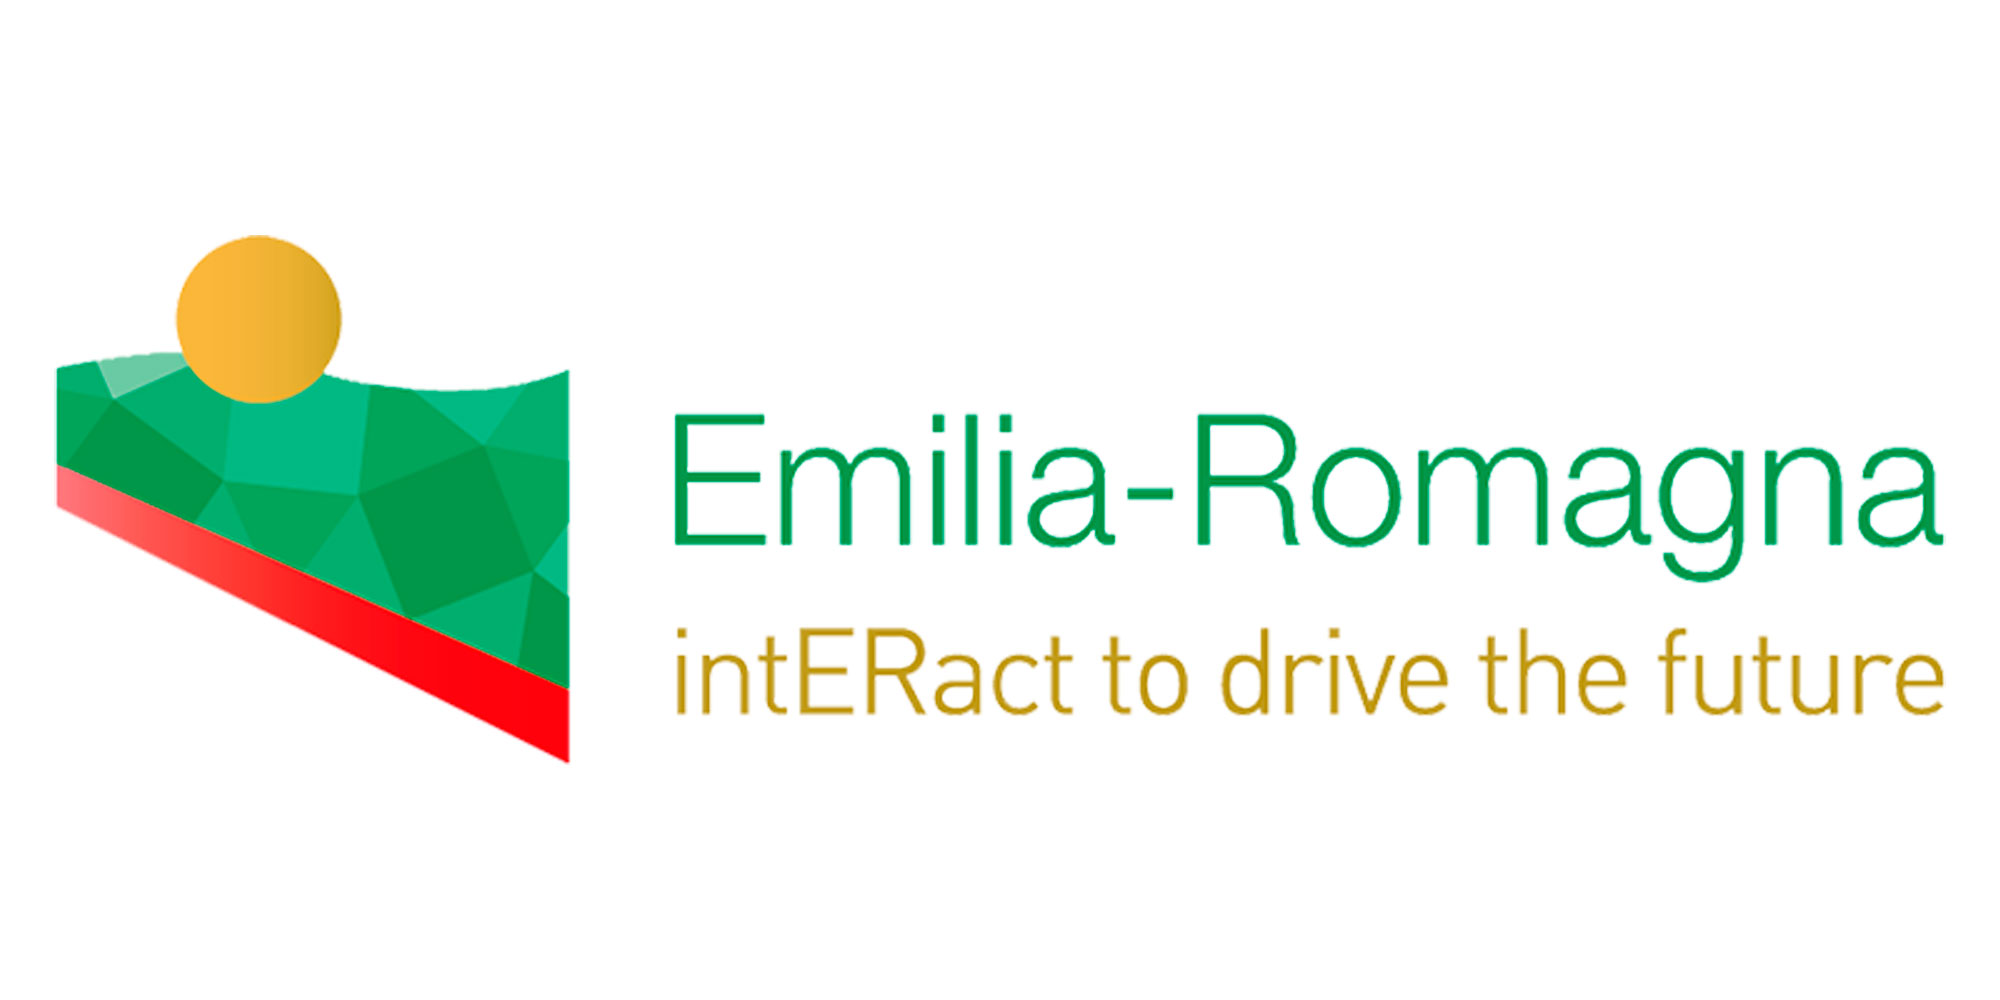 emilia romagna, interact to drive the future